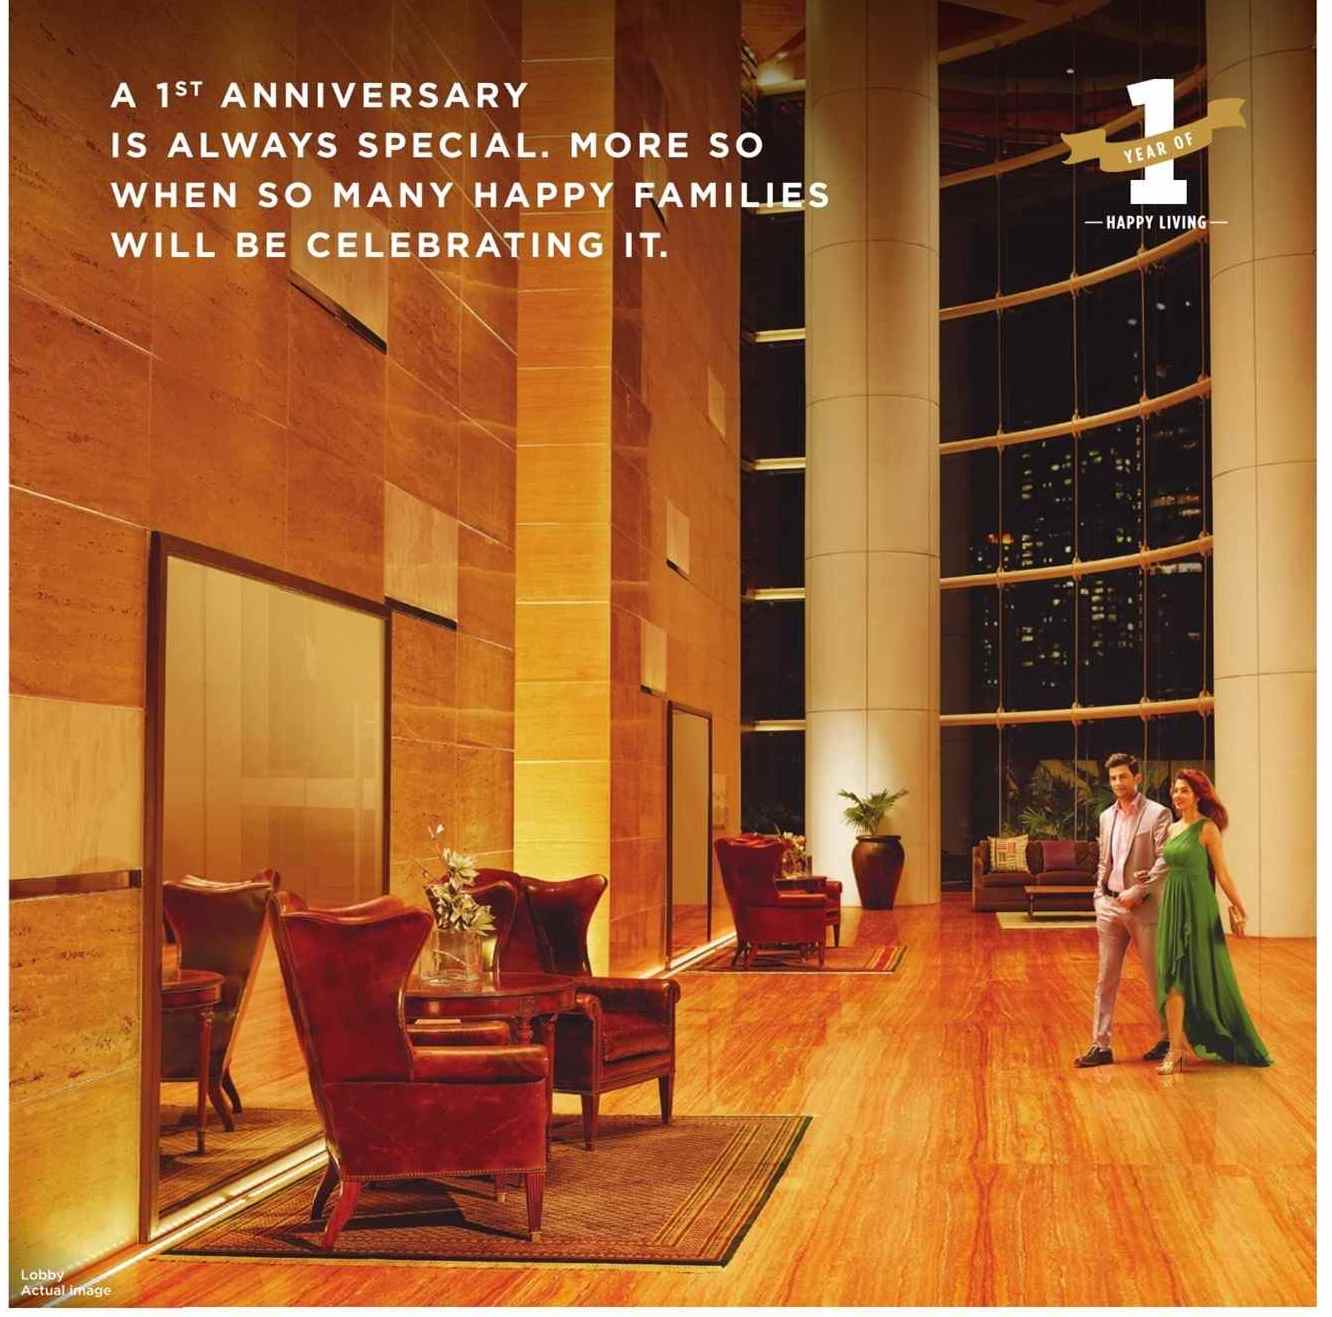 Indiabulls Sky celebrating its 1st anniversary, Mumbai